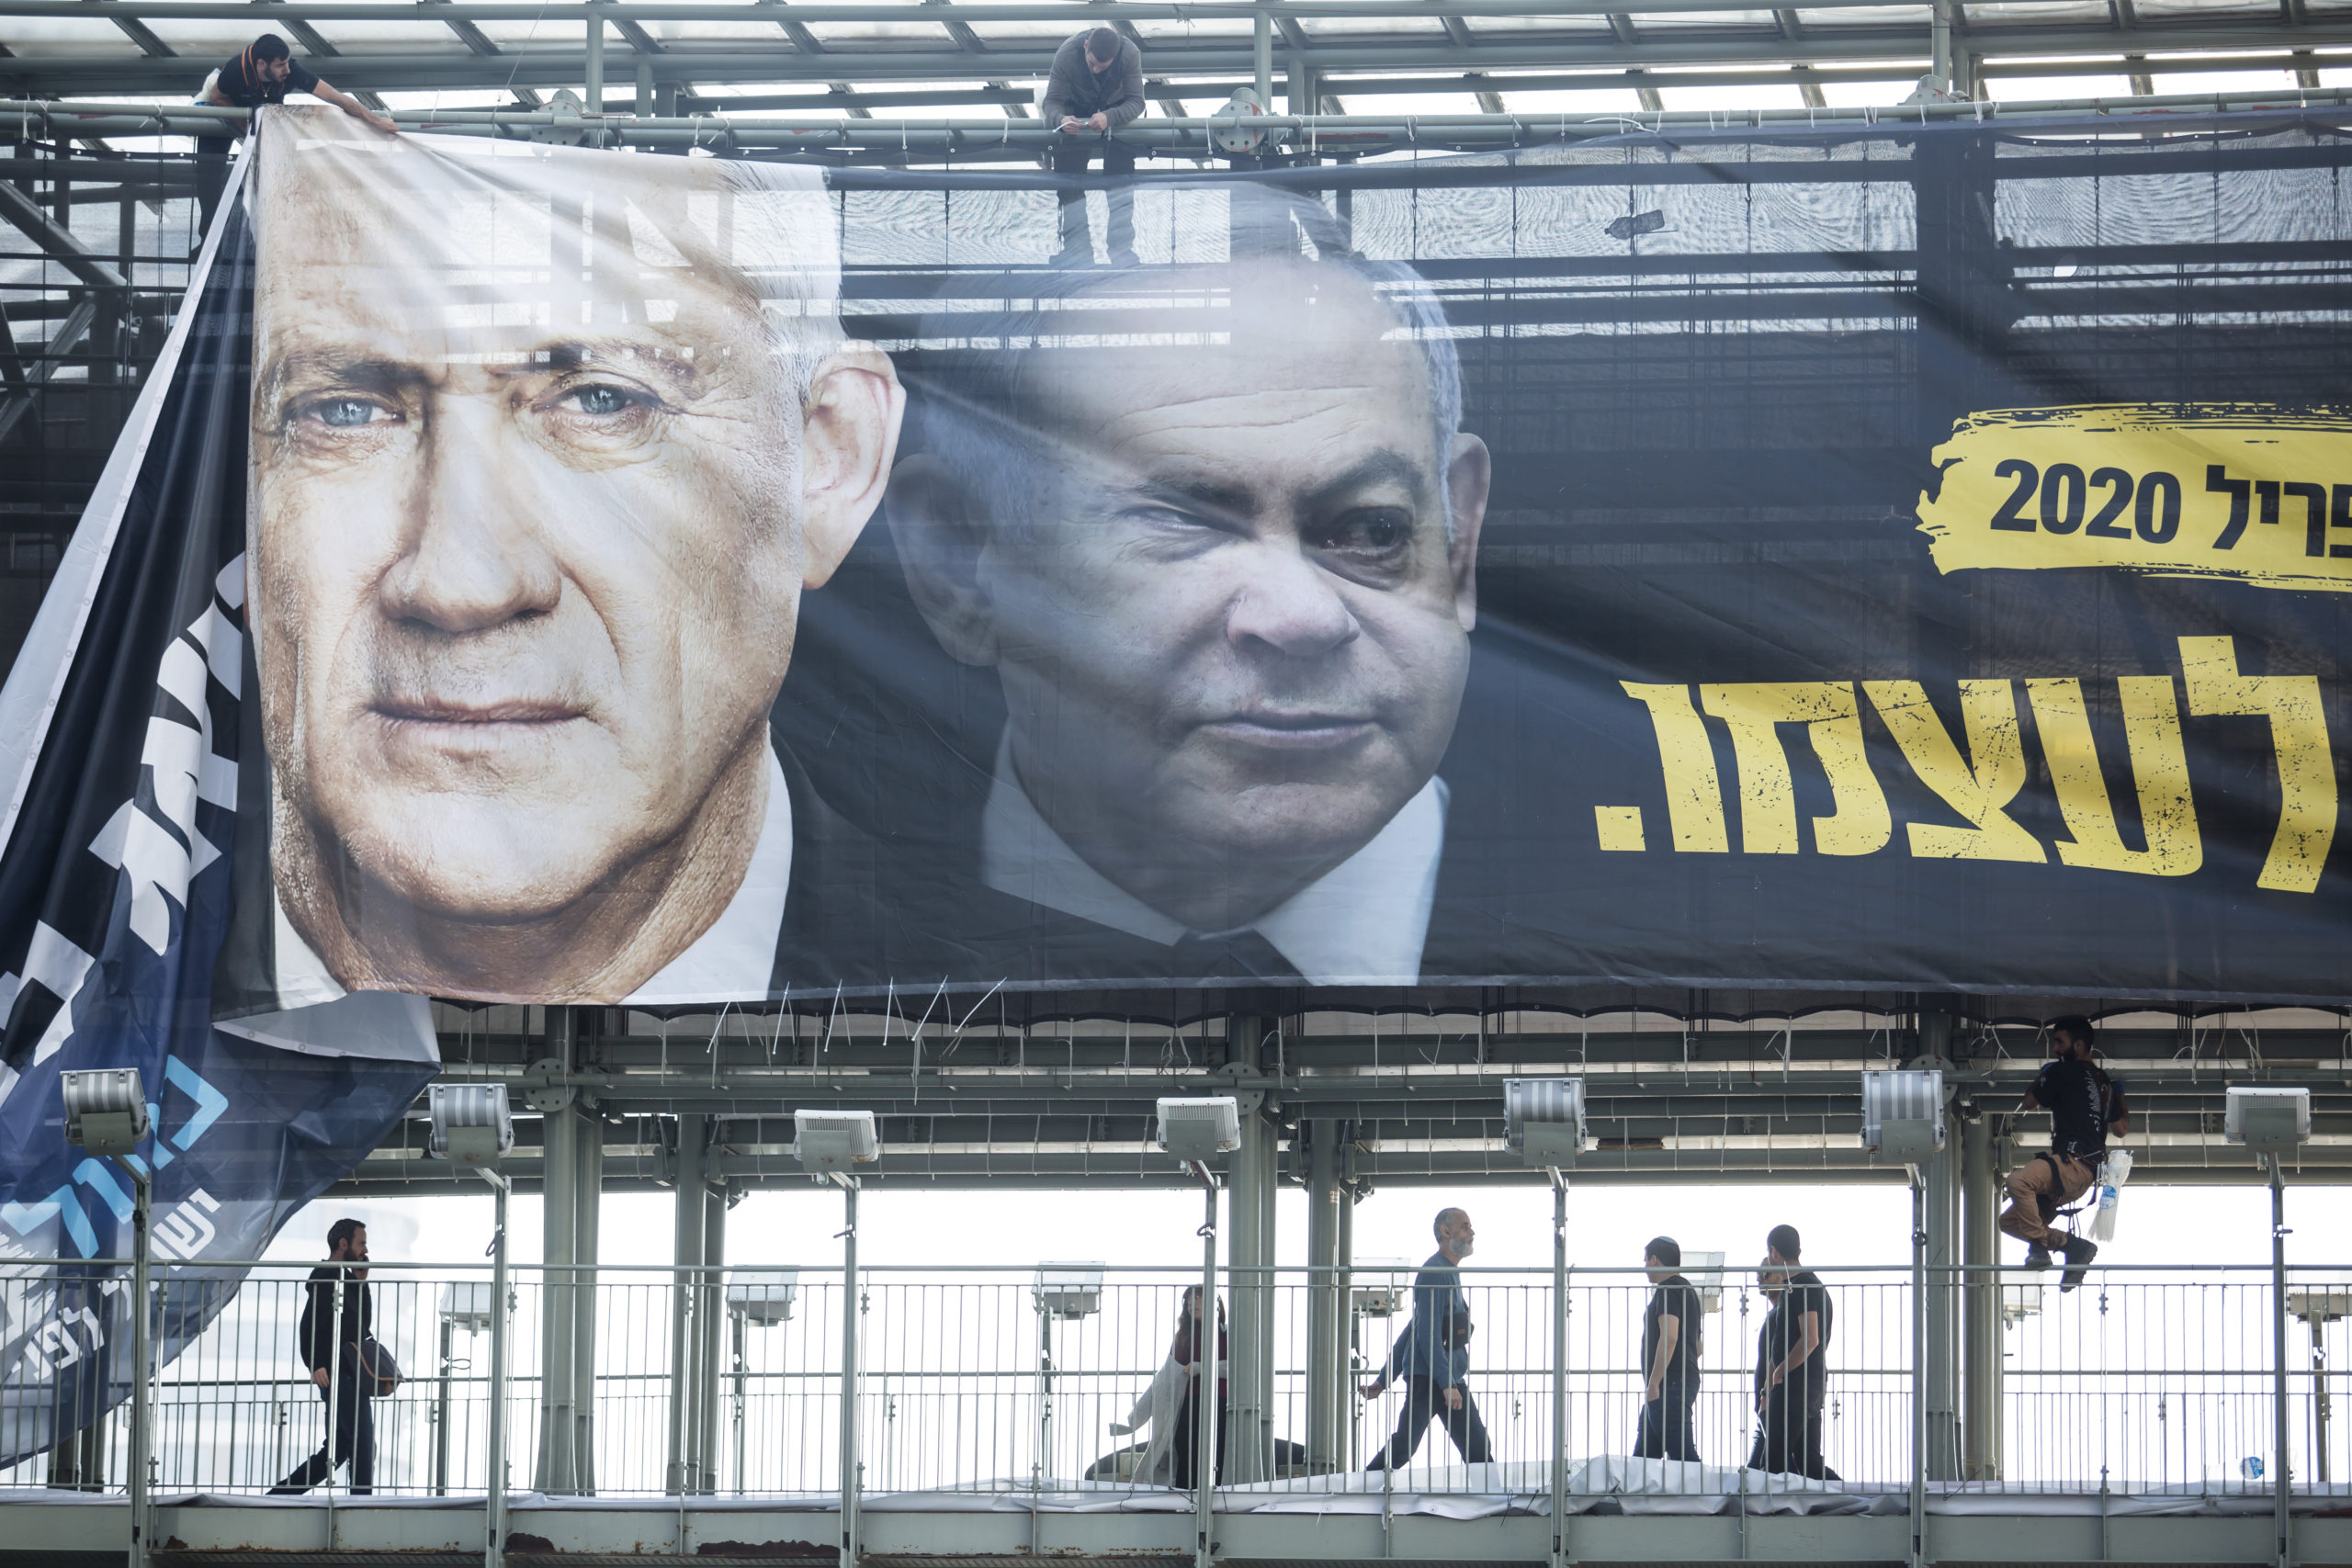 Netanyahu Pulls Ahead of Gantz in Final Furlong of Electoral Race